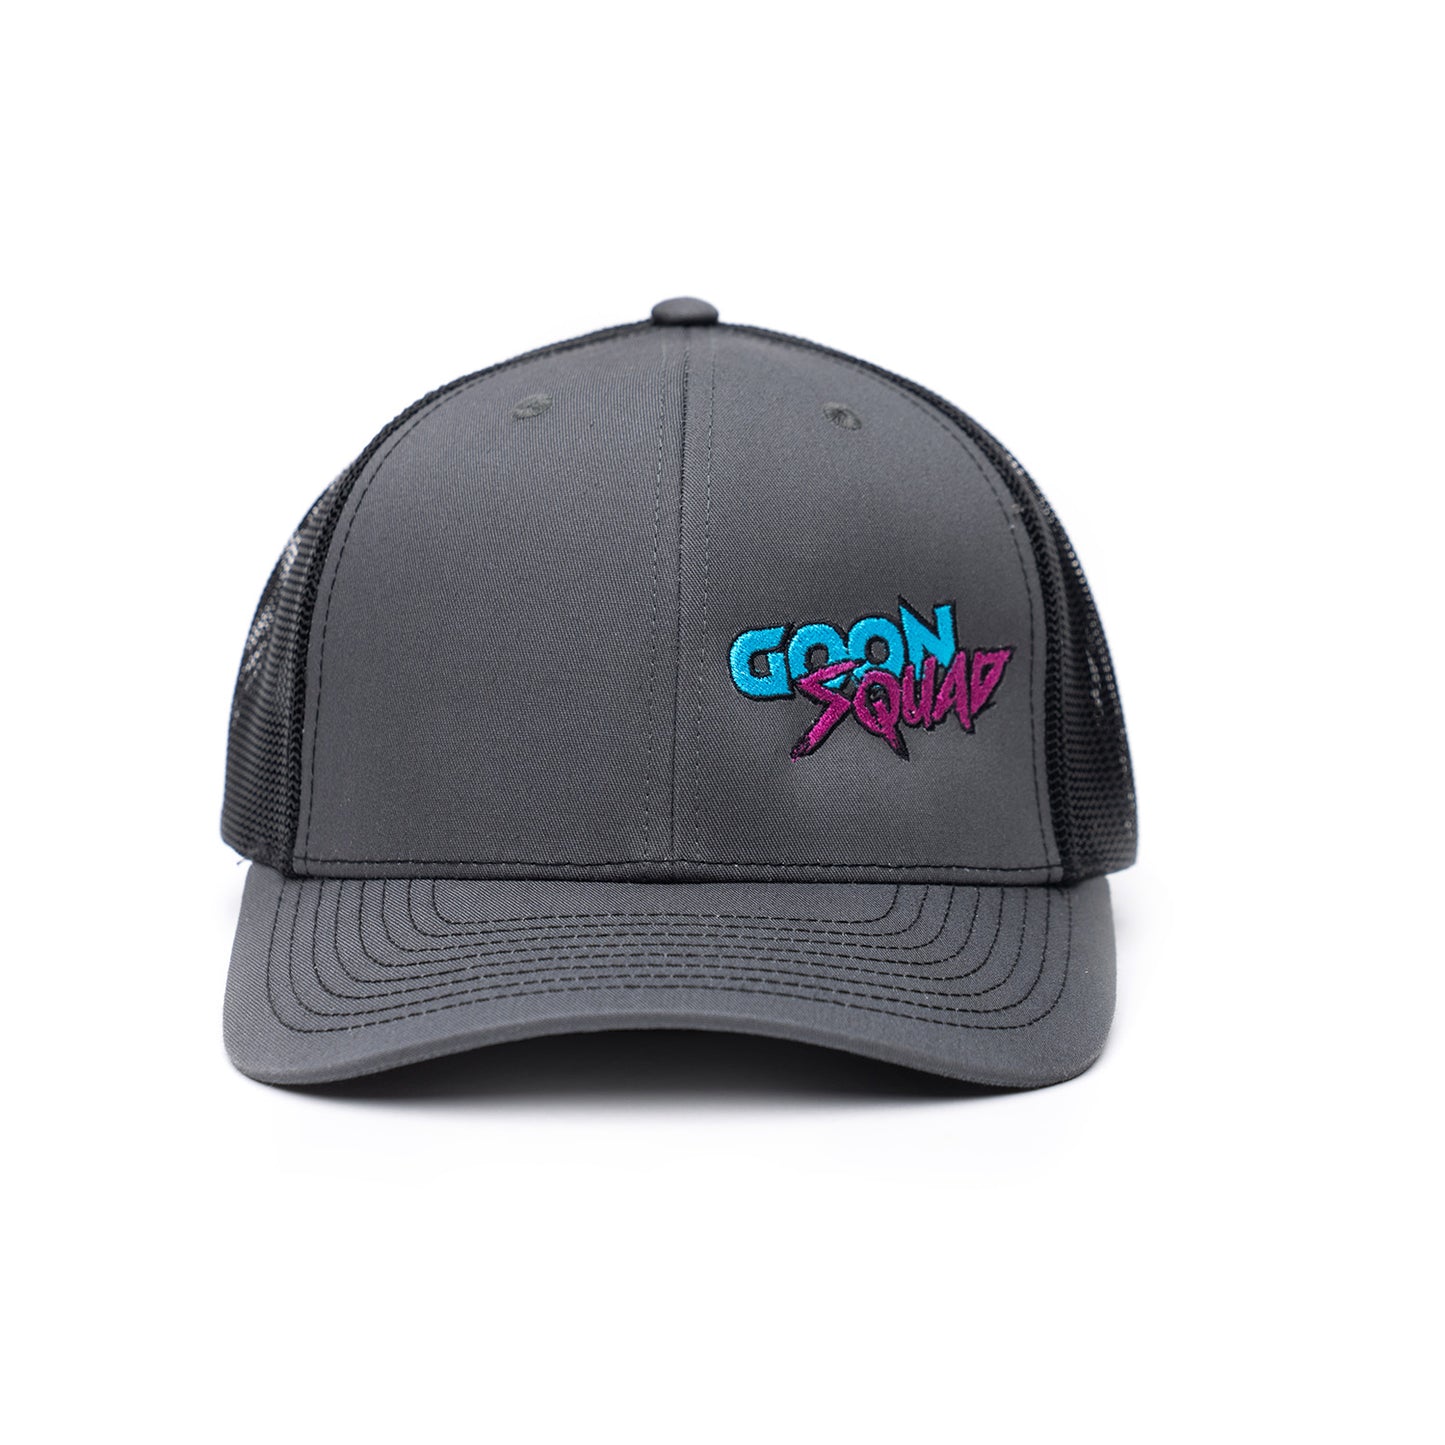 Grey Goon Squad Hat